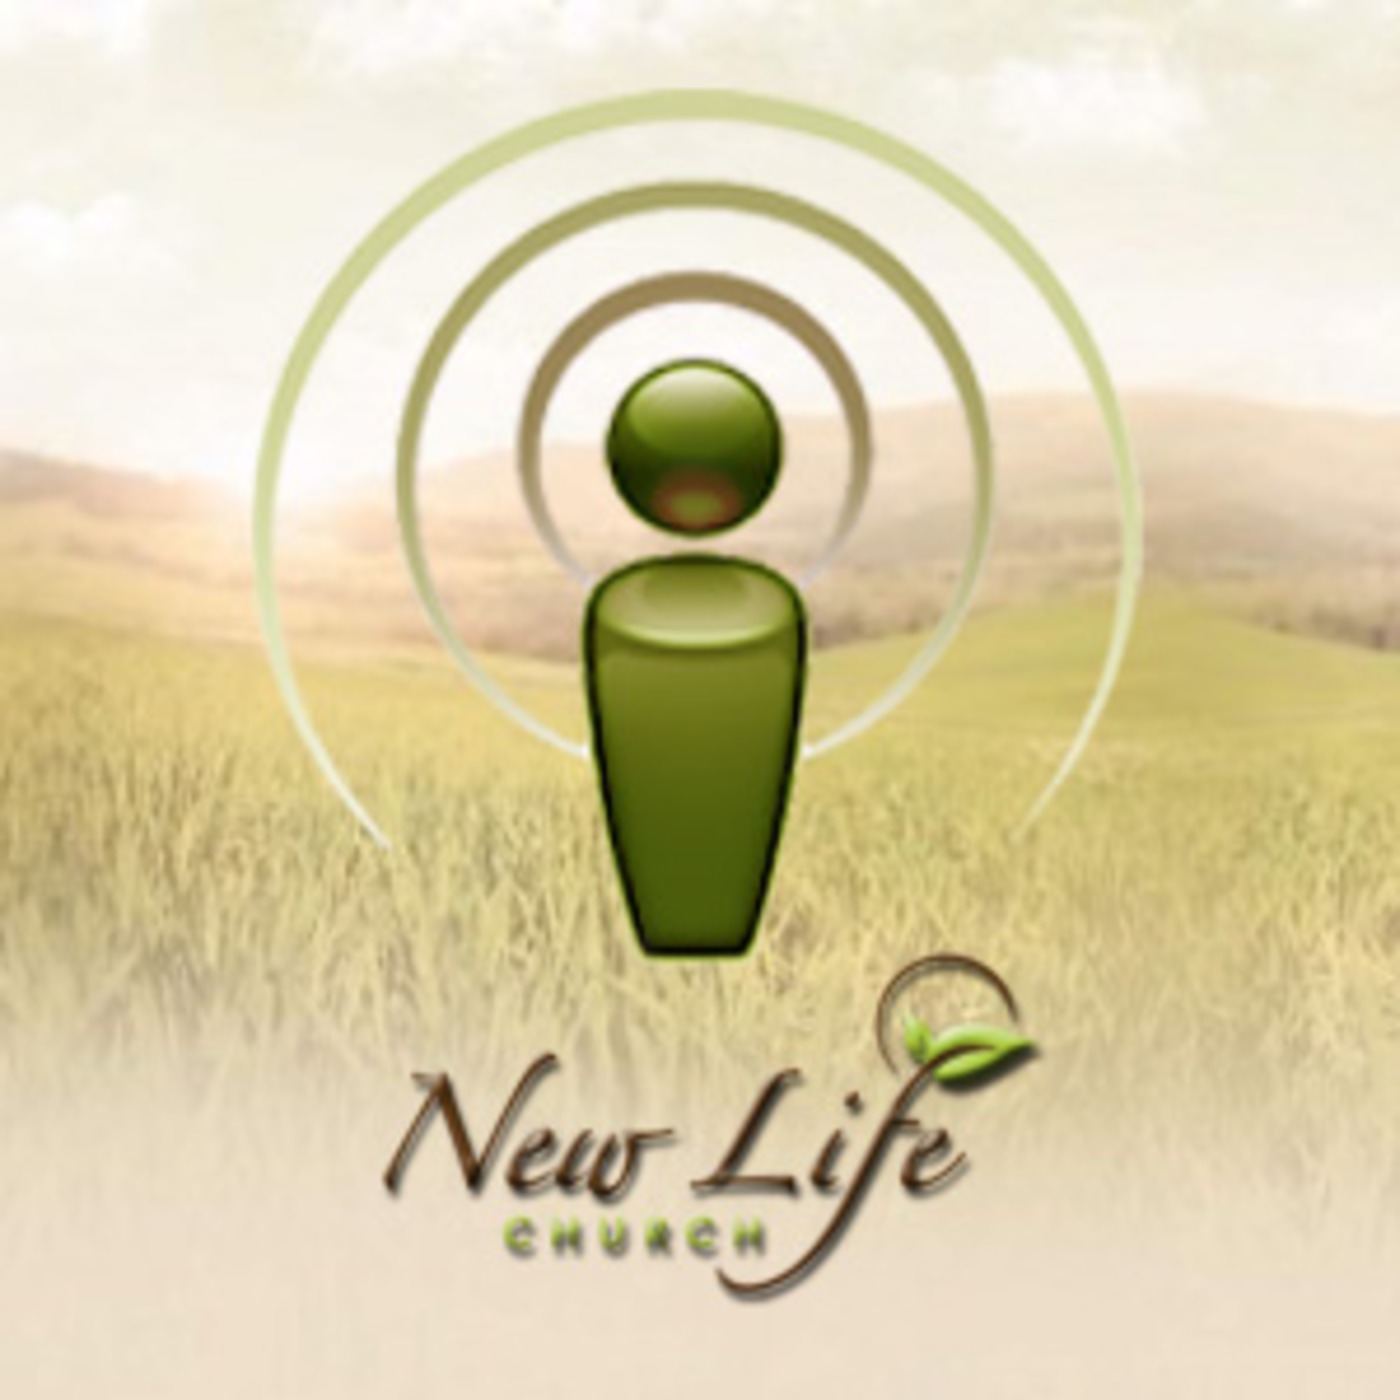 New Life Church Podcast